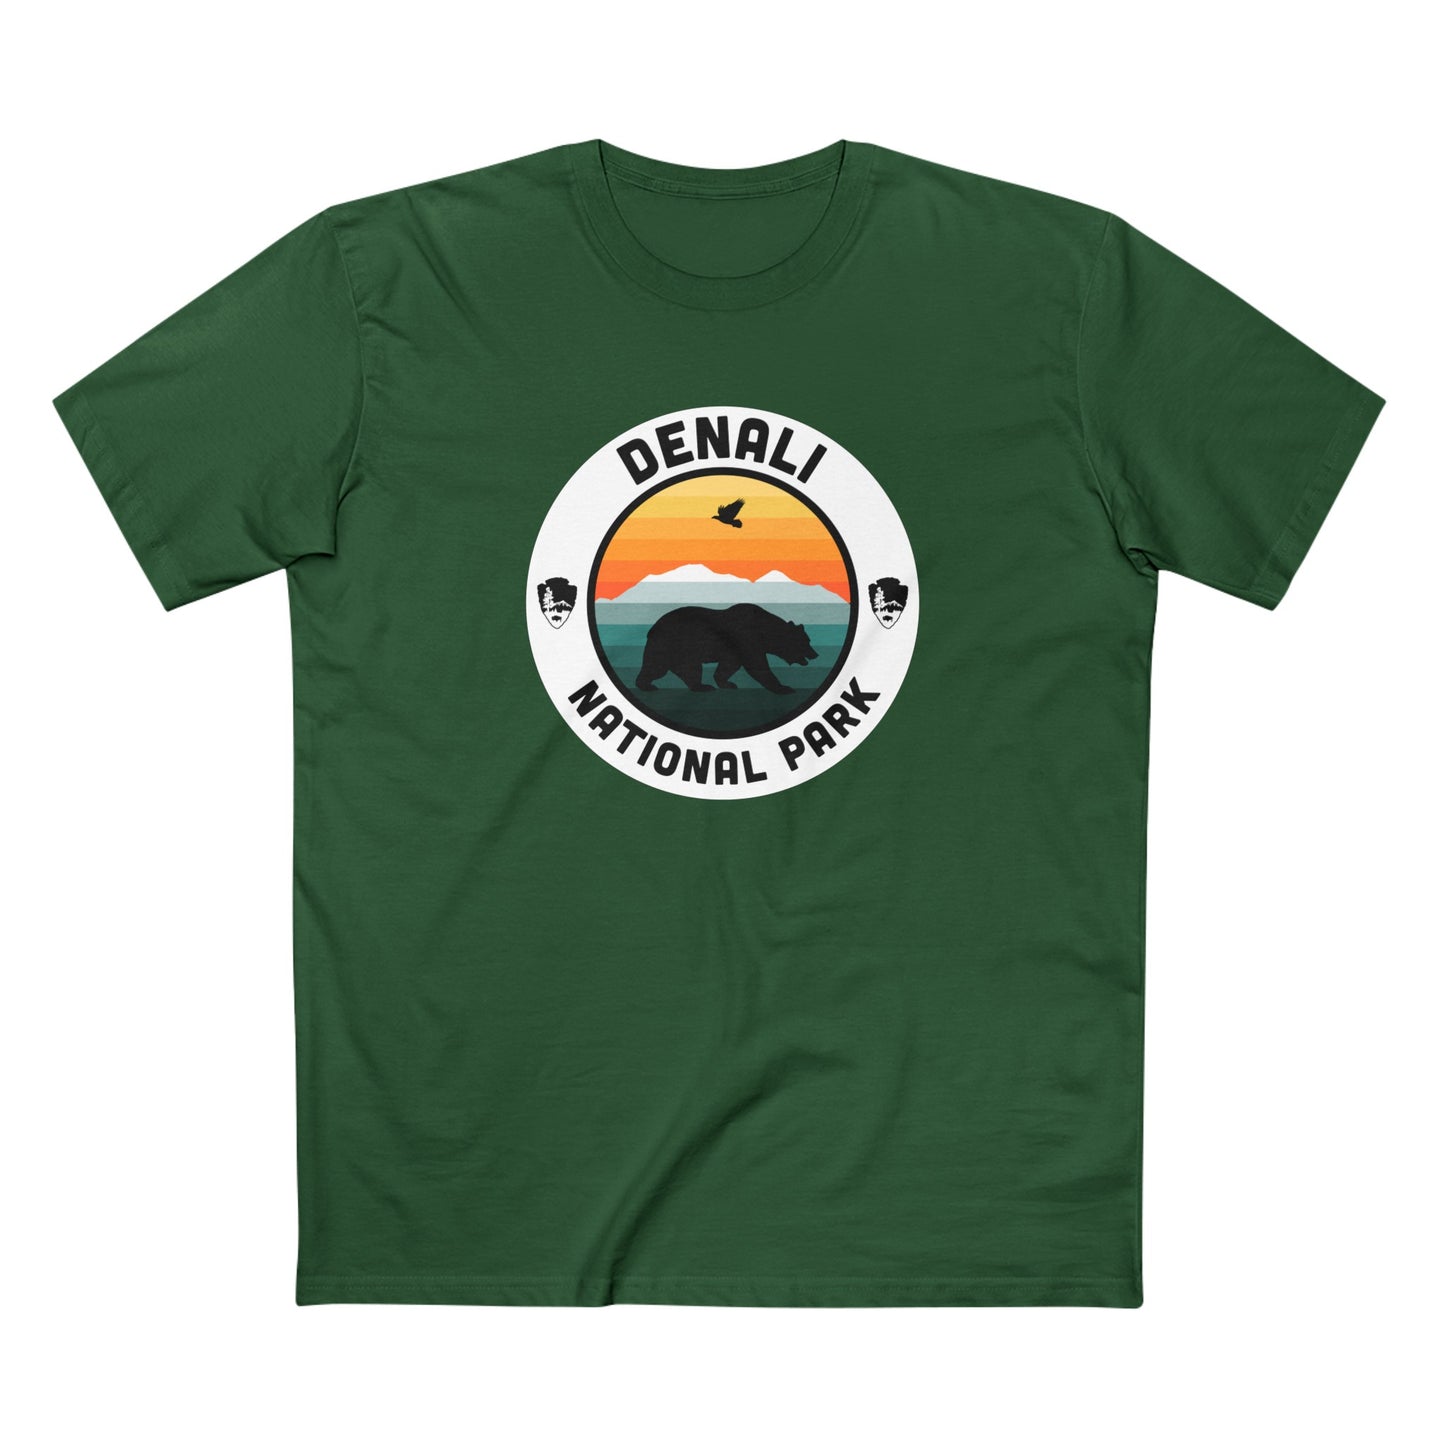 Denali National Park T-Shirt - Round Badge Design